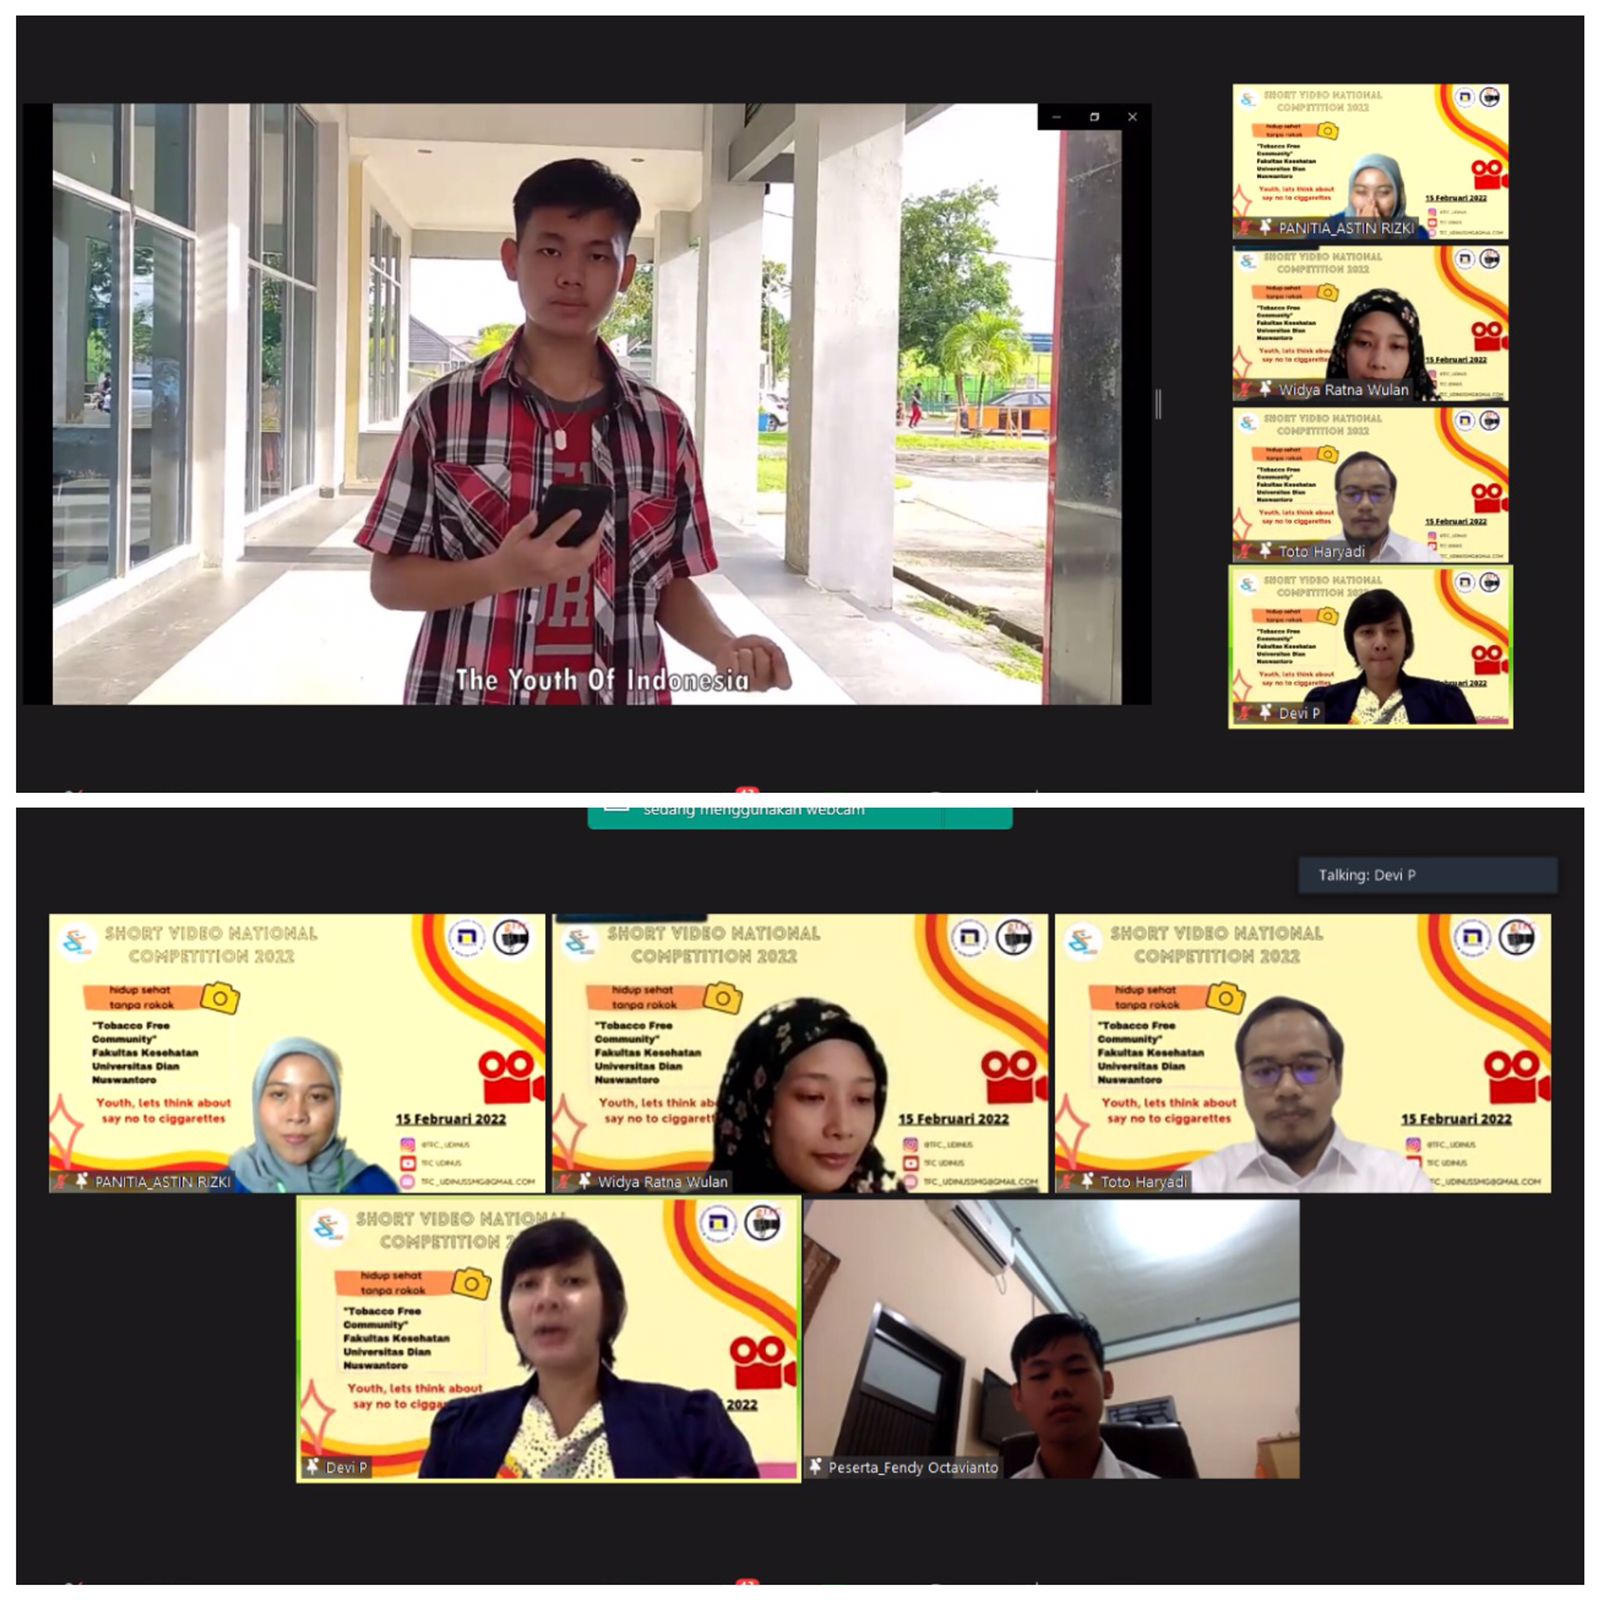 Presentasi dan Komentar Juri Video Peserta Kategori SMA/SMK/MA